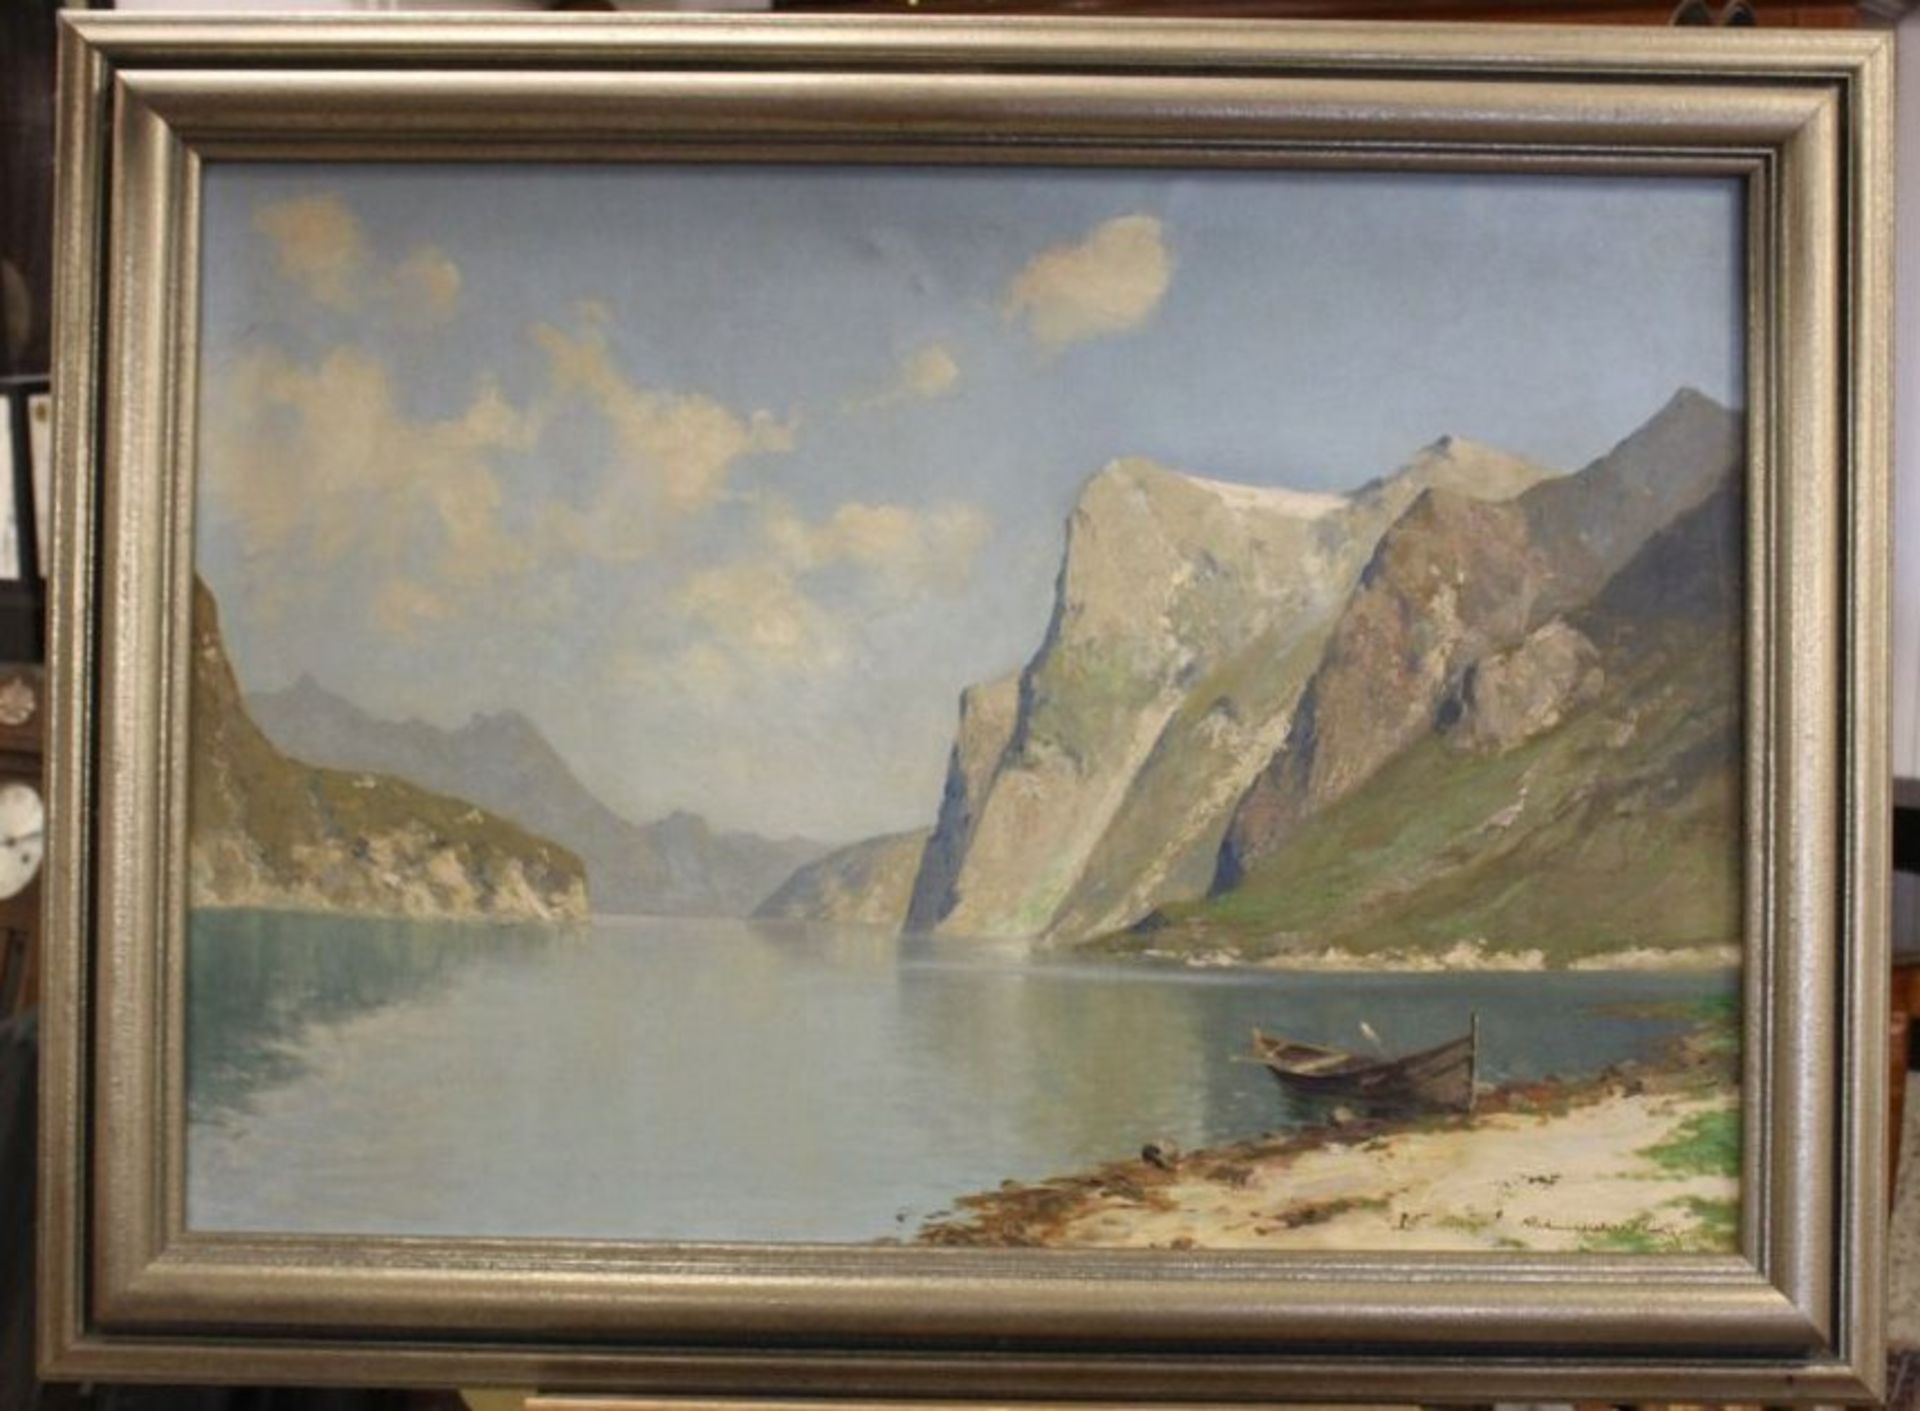 unleserl. signierte Fjord-Landschaft, Öl/Leinwand, gerahmt, RG 88 x 118cm.- - -22.61 % buyer's - Bild 3 aus 3